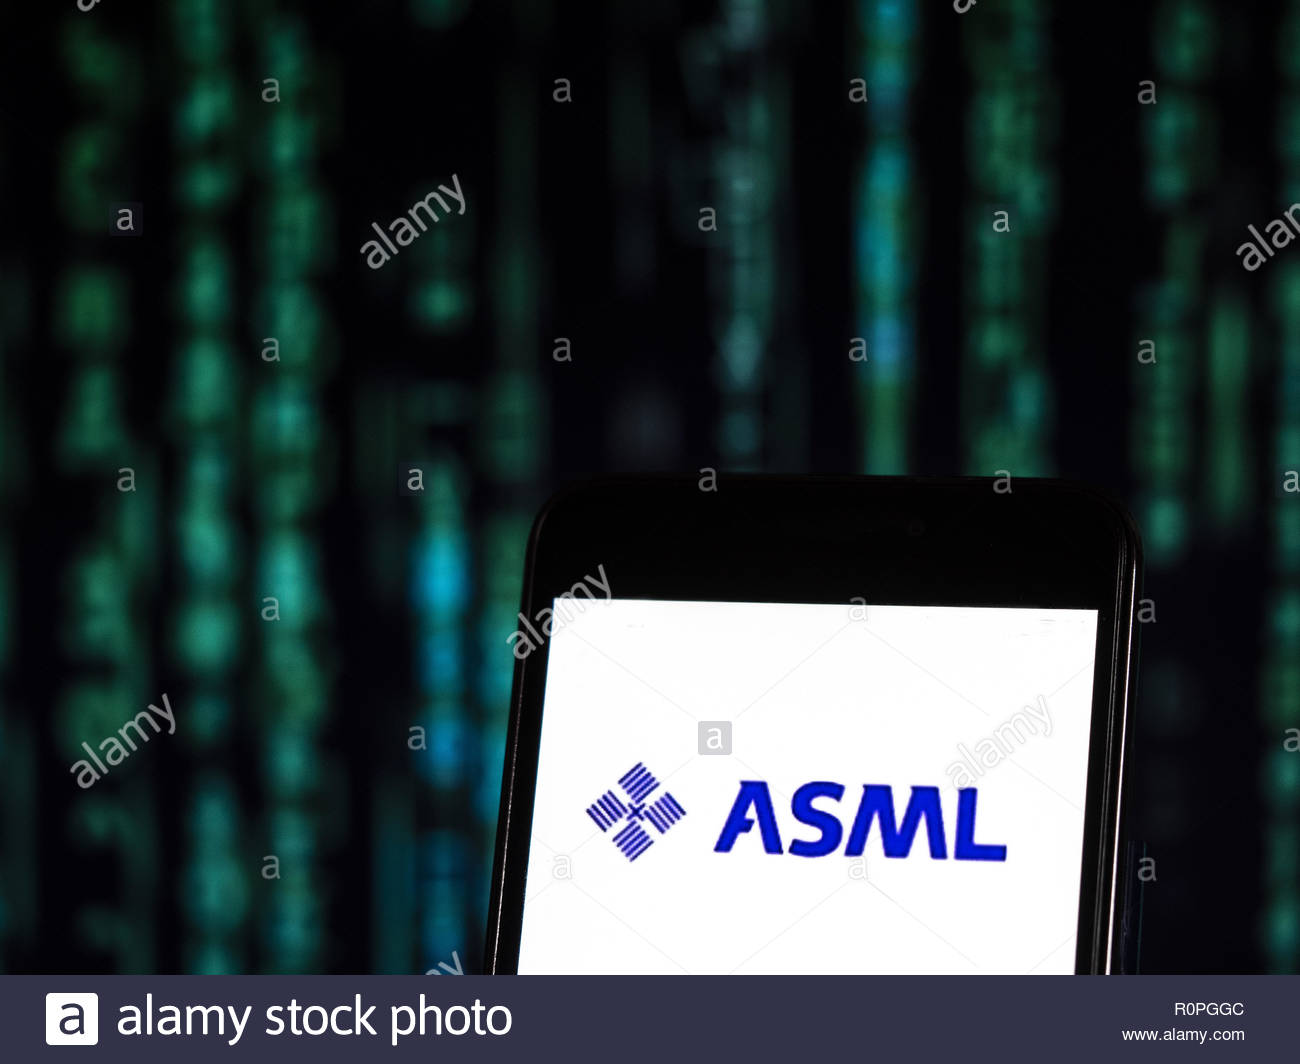 Asml Stock Photos Image